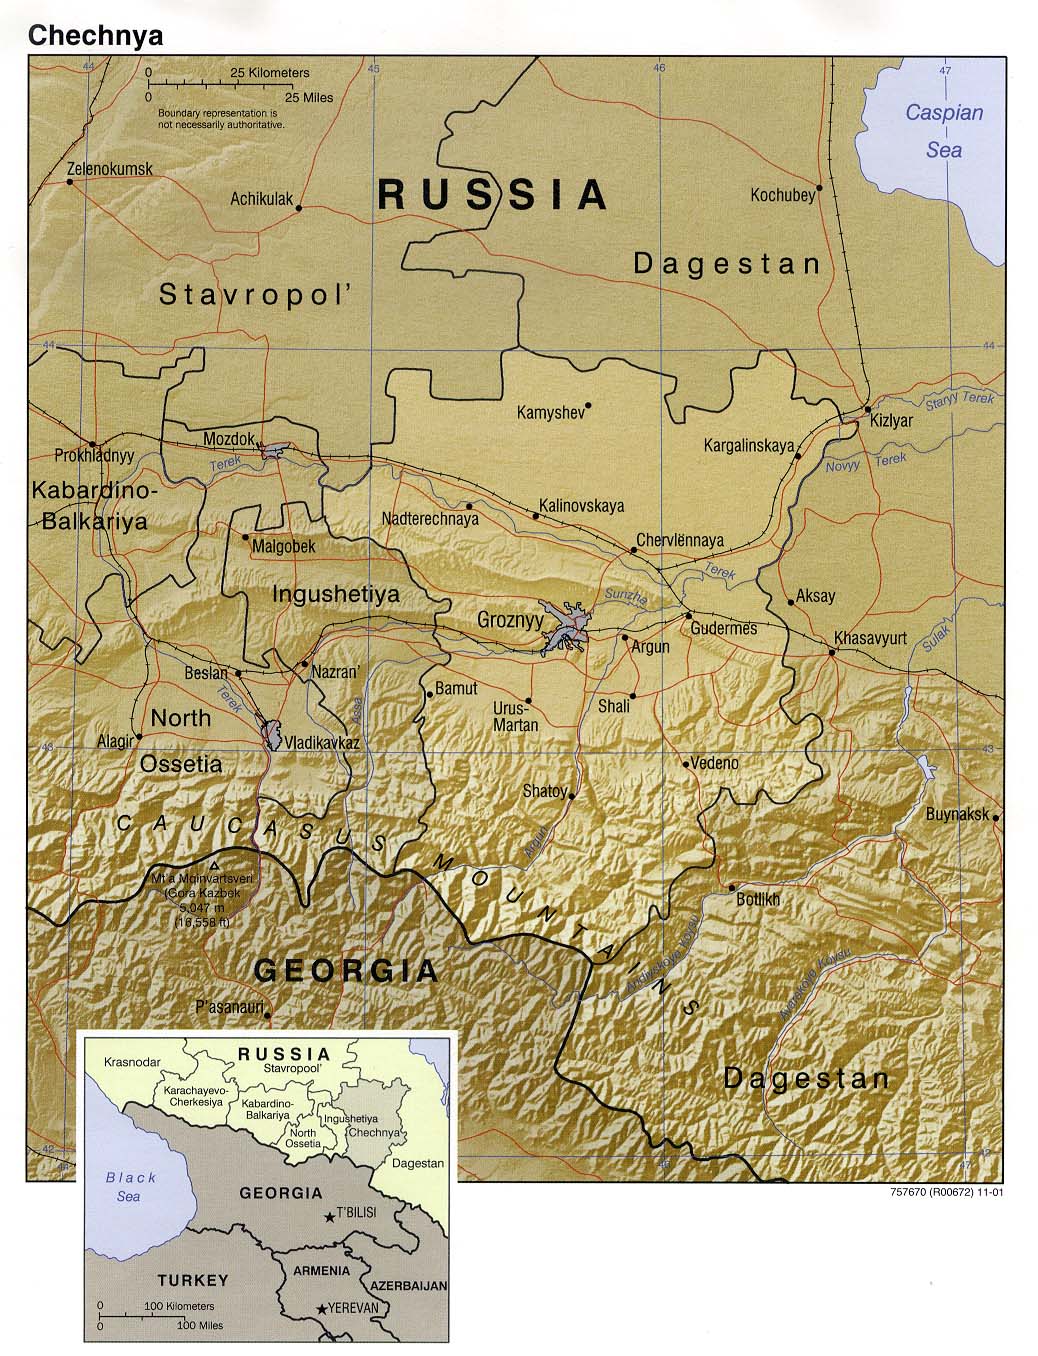 http://www.lib.utexas.edu/maps/commonwealth/chechnya_rel01.jpg